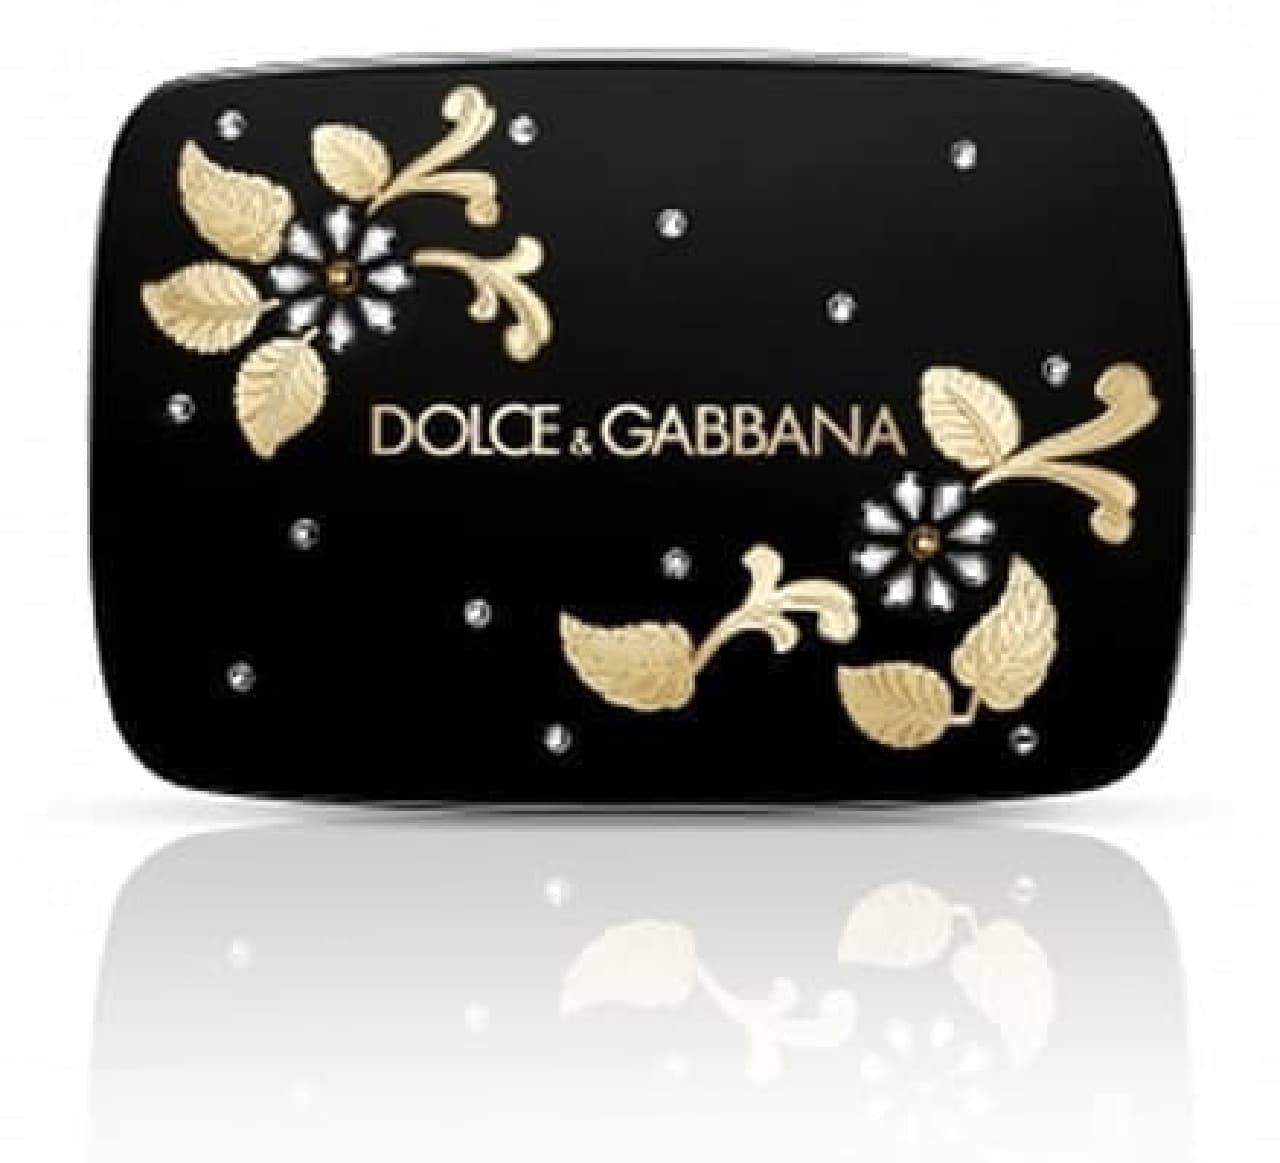 Dolce & Gabbana Beauty "Dolce & Gabbana Dolce Skin All-in-One Face Palette"